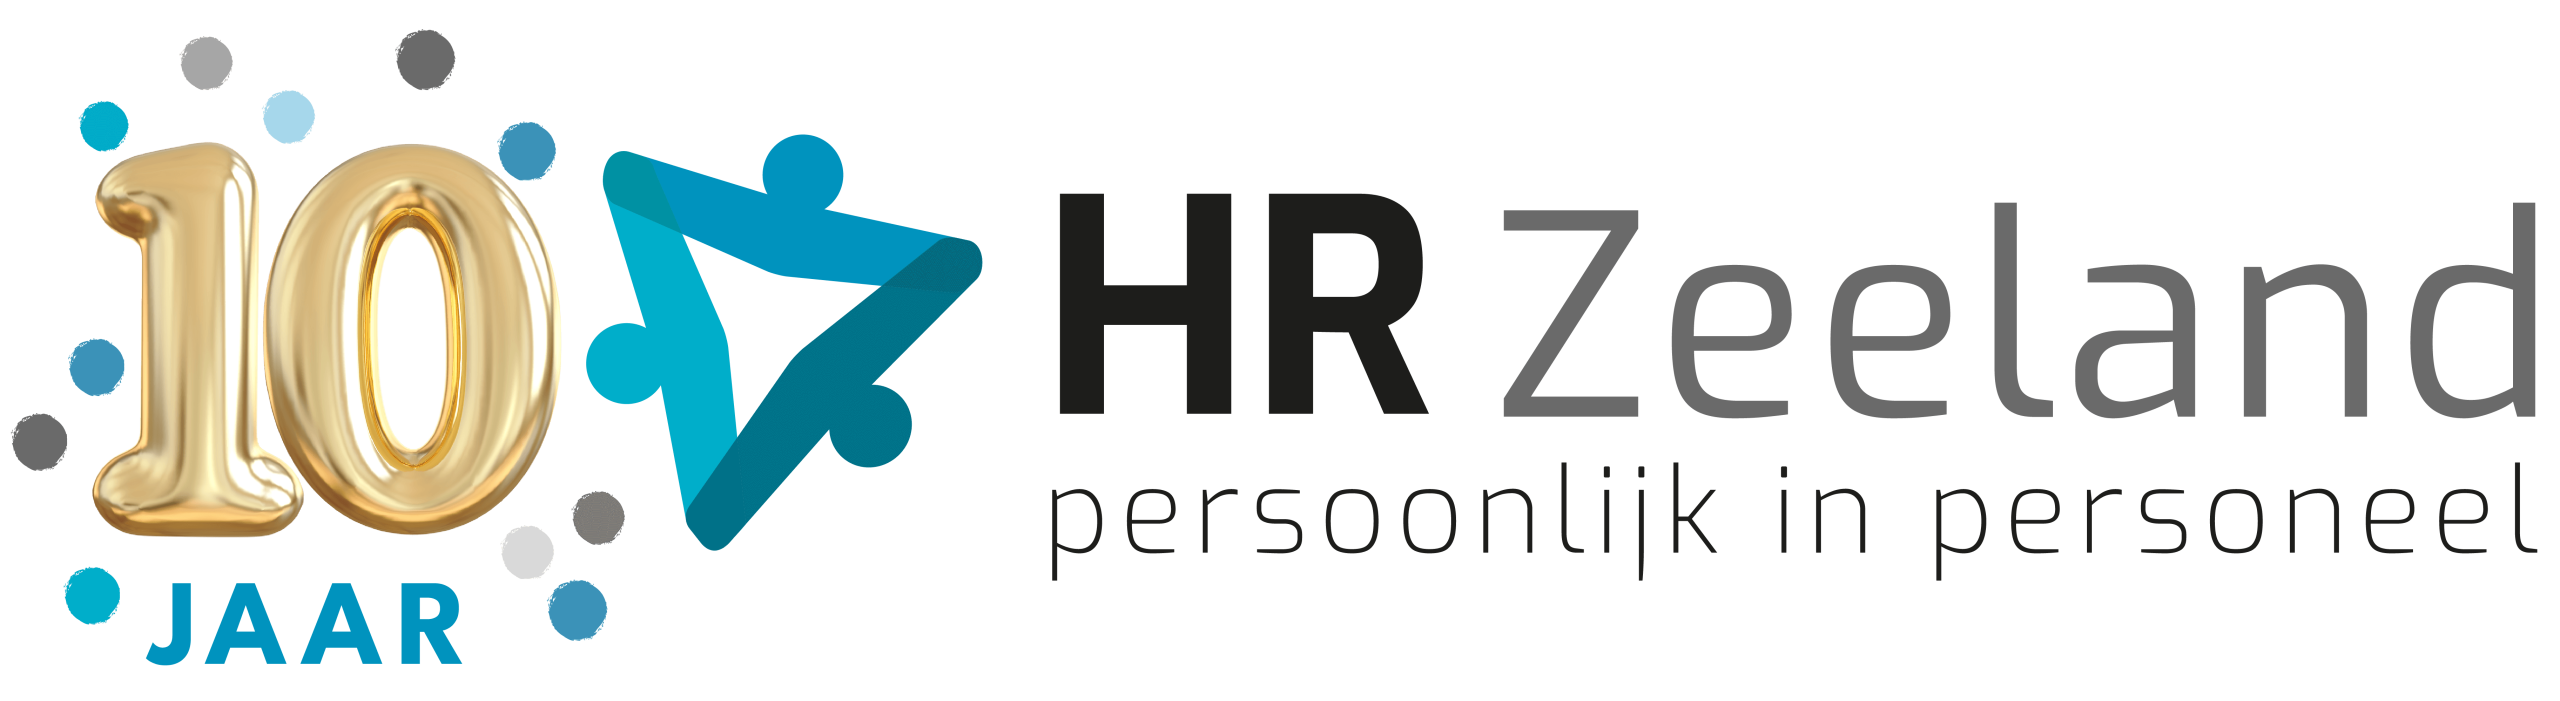 jubileum-logo-HR-Zeeland-1